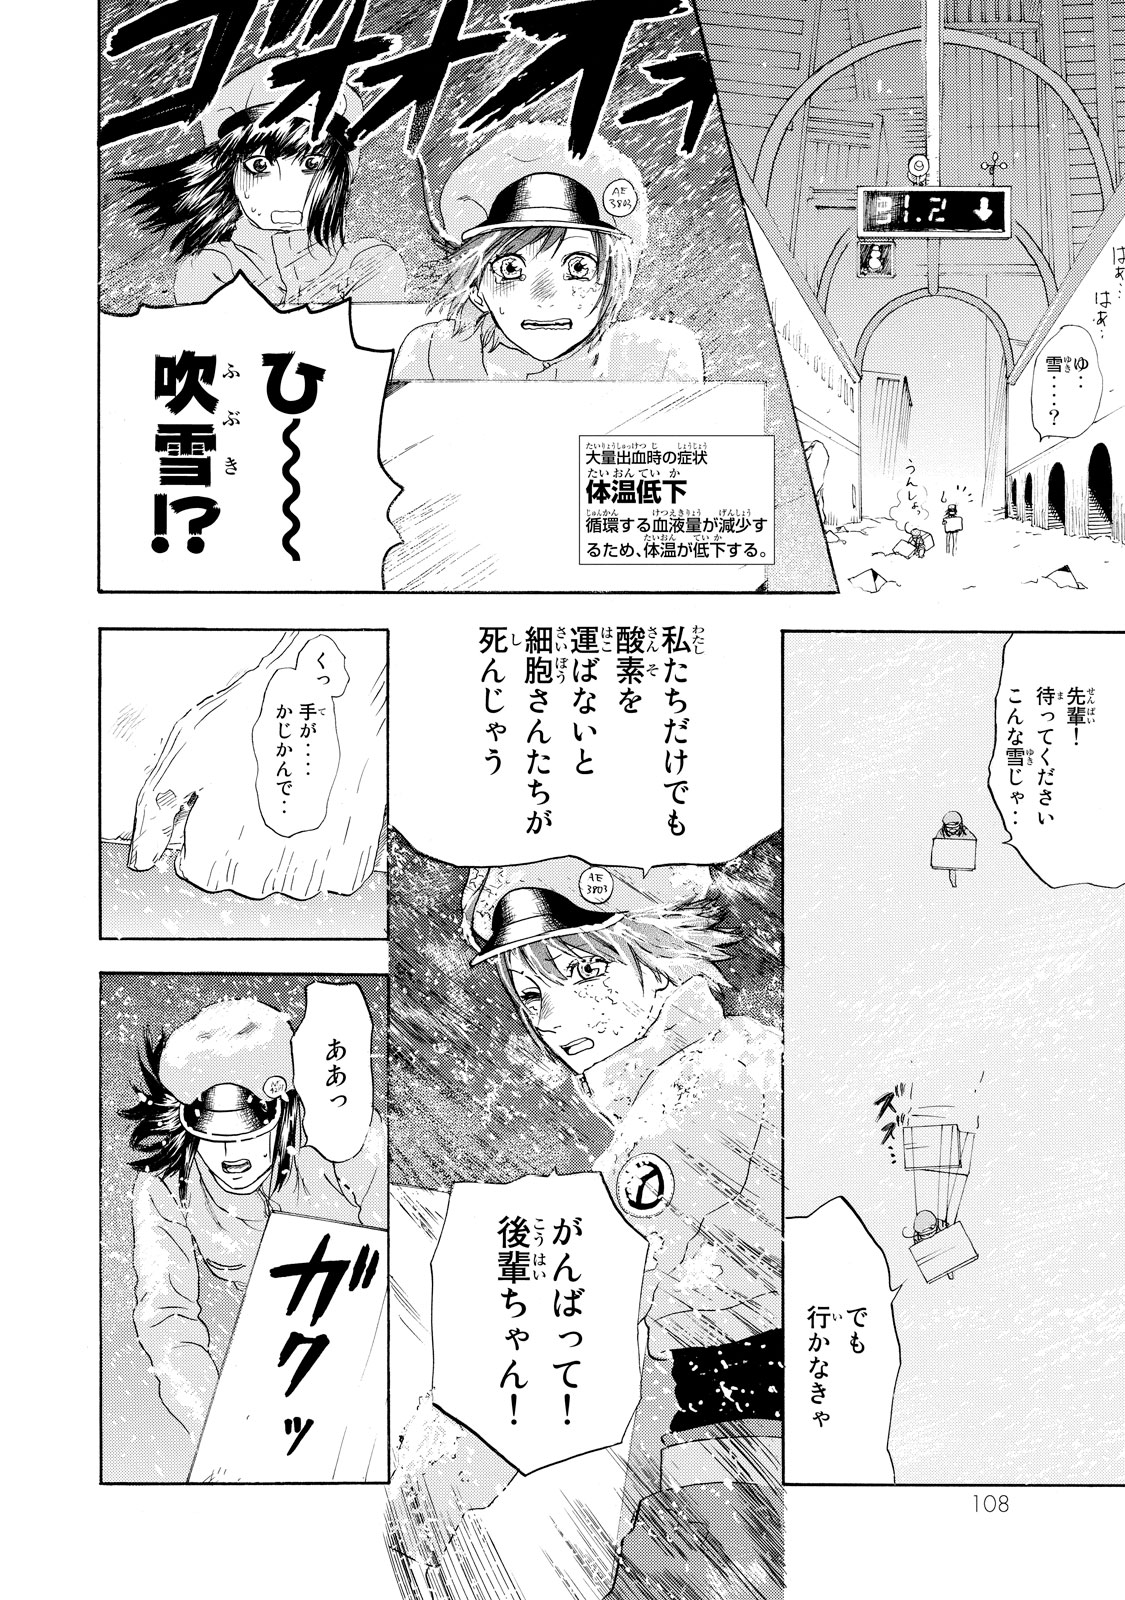 Hataraku Saibou - Chapter 18 - Page 10